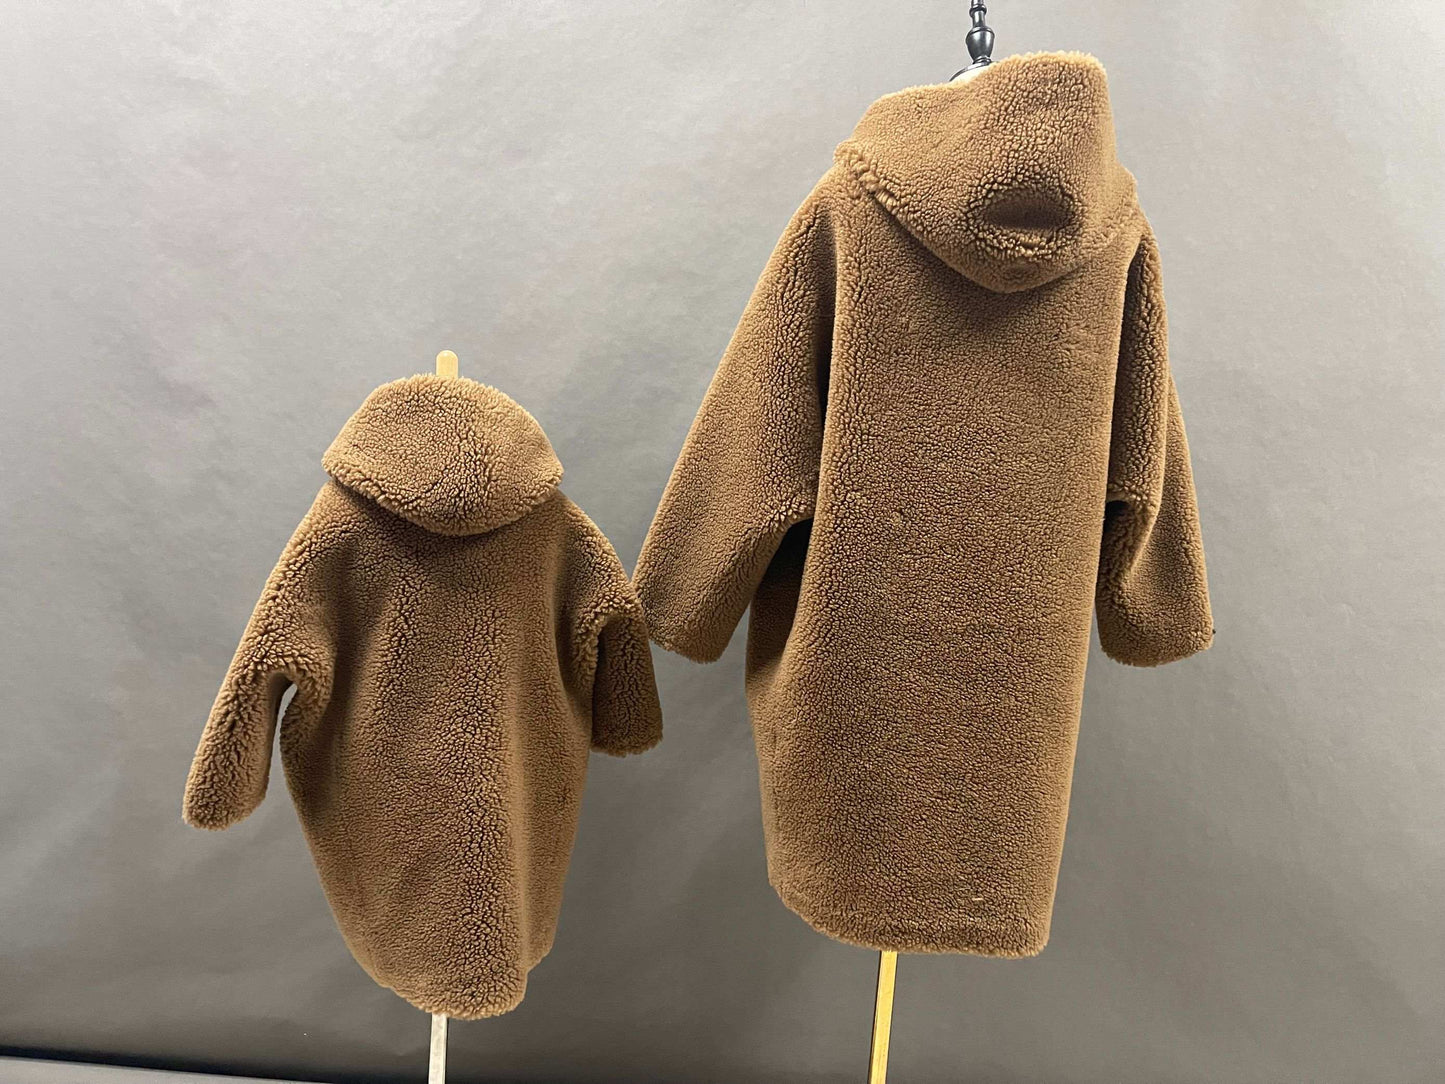 DON JOHN Teddy Bear Hooded Coats For Adults & Children Unisex